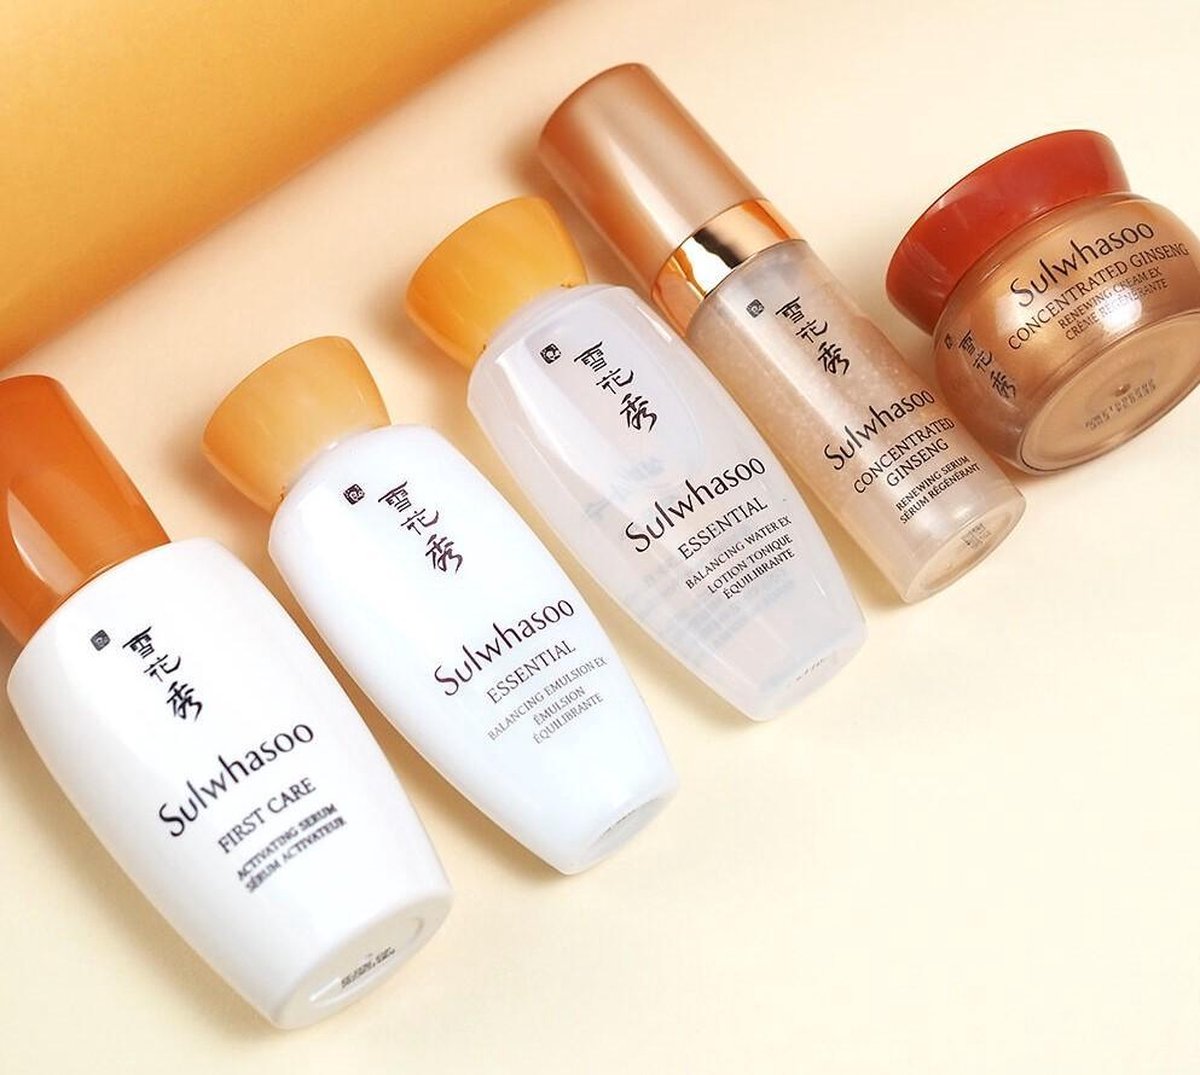 Sulwhasoo Signature Beauty Routine Kit (5 items) - Korean Skincare